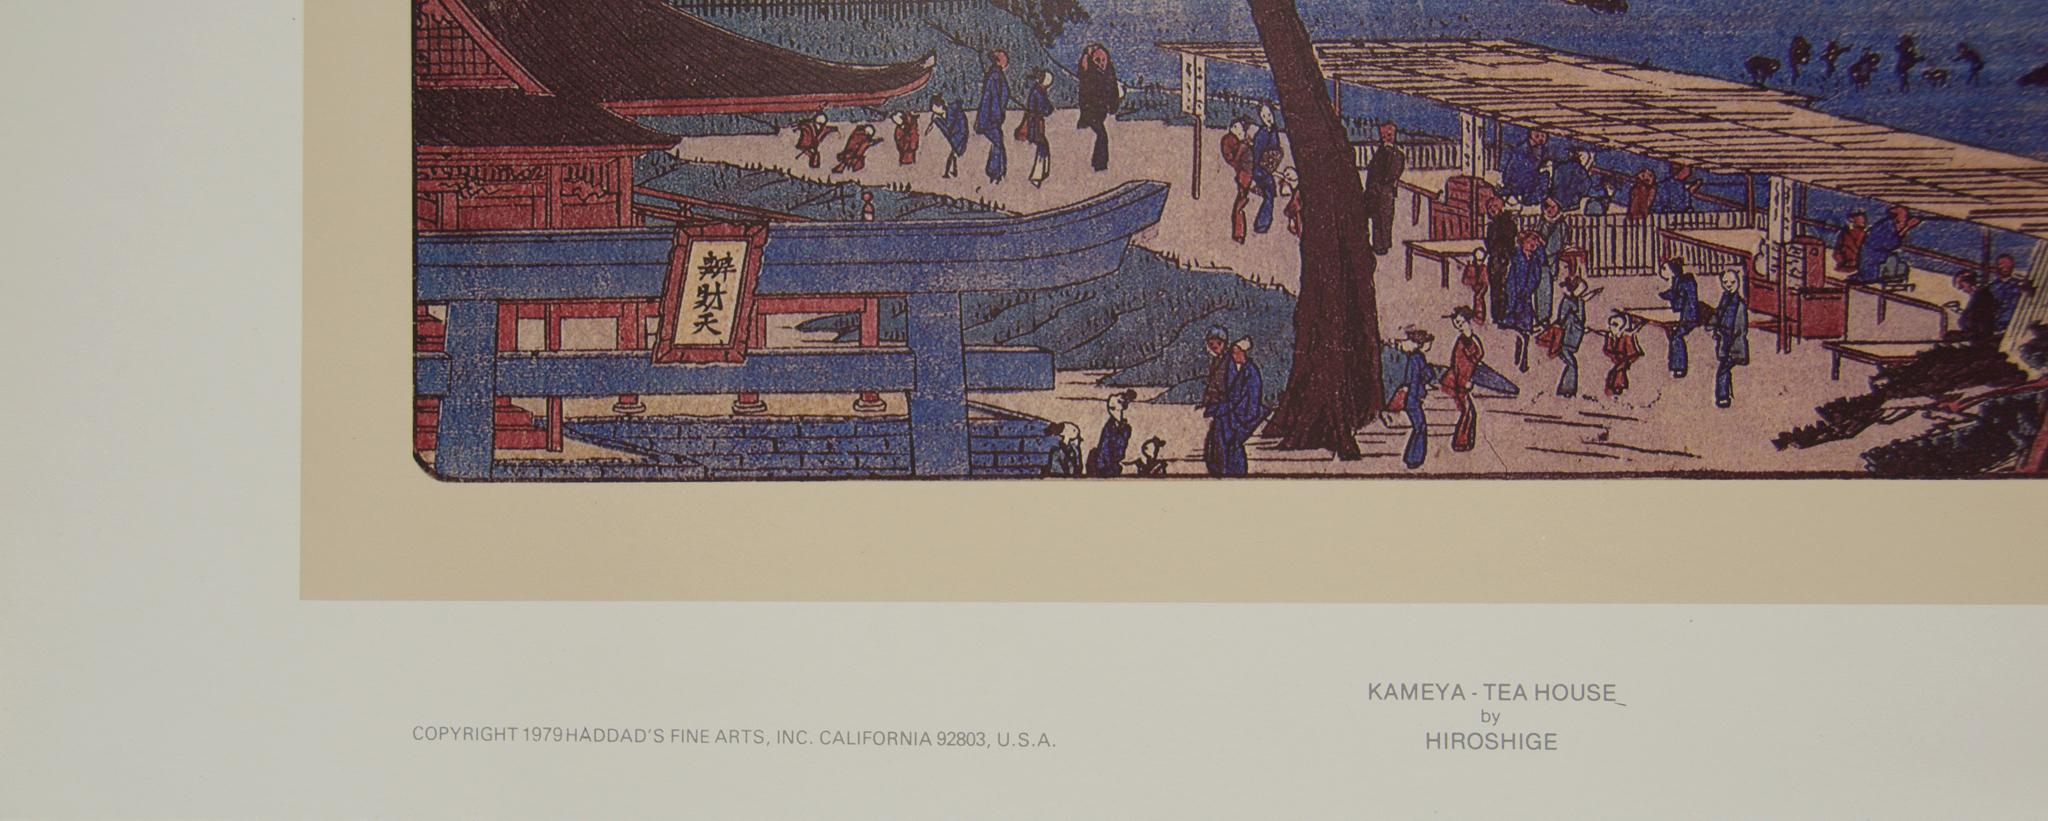 Kameya - Tea House  - Print by Utagawa Hiroshige (Ando Hiroshige)